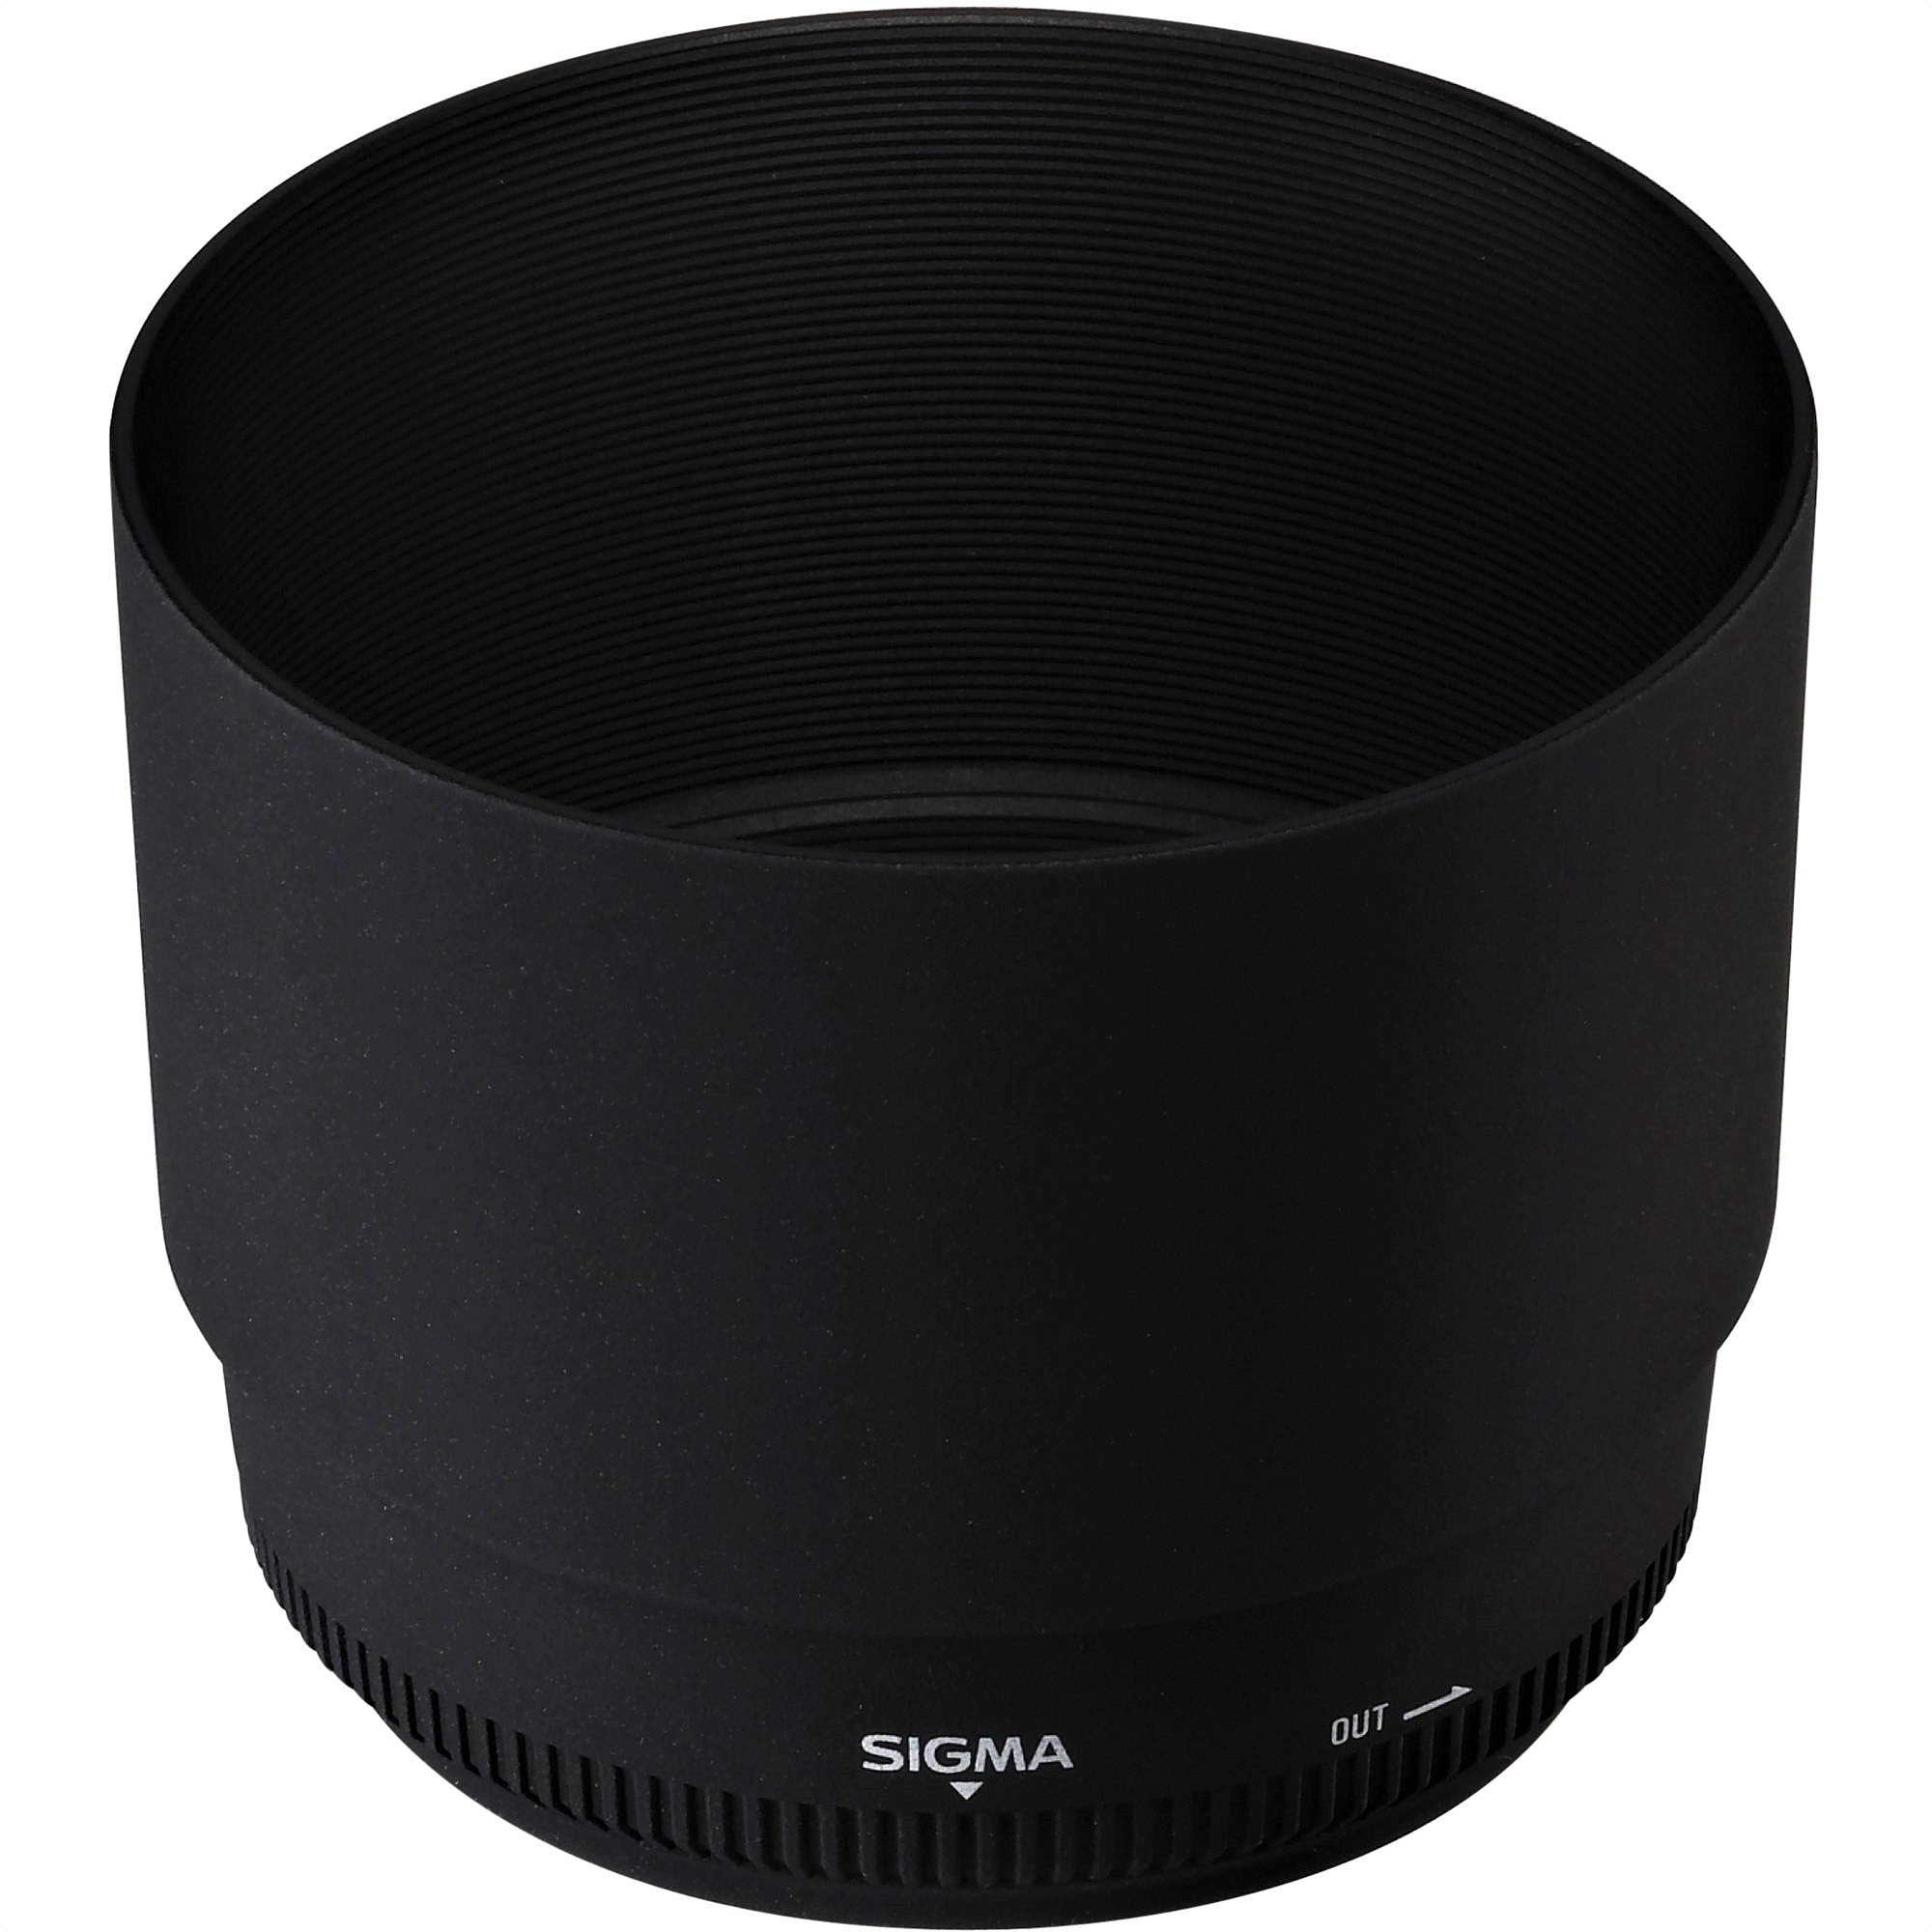 Sigma Lens Hood for 120-400mm F4.5-5.6 APO Digital OS HSM Lens